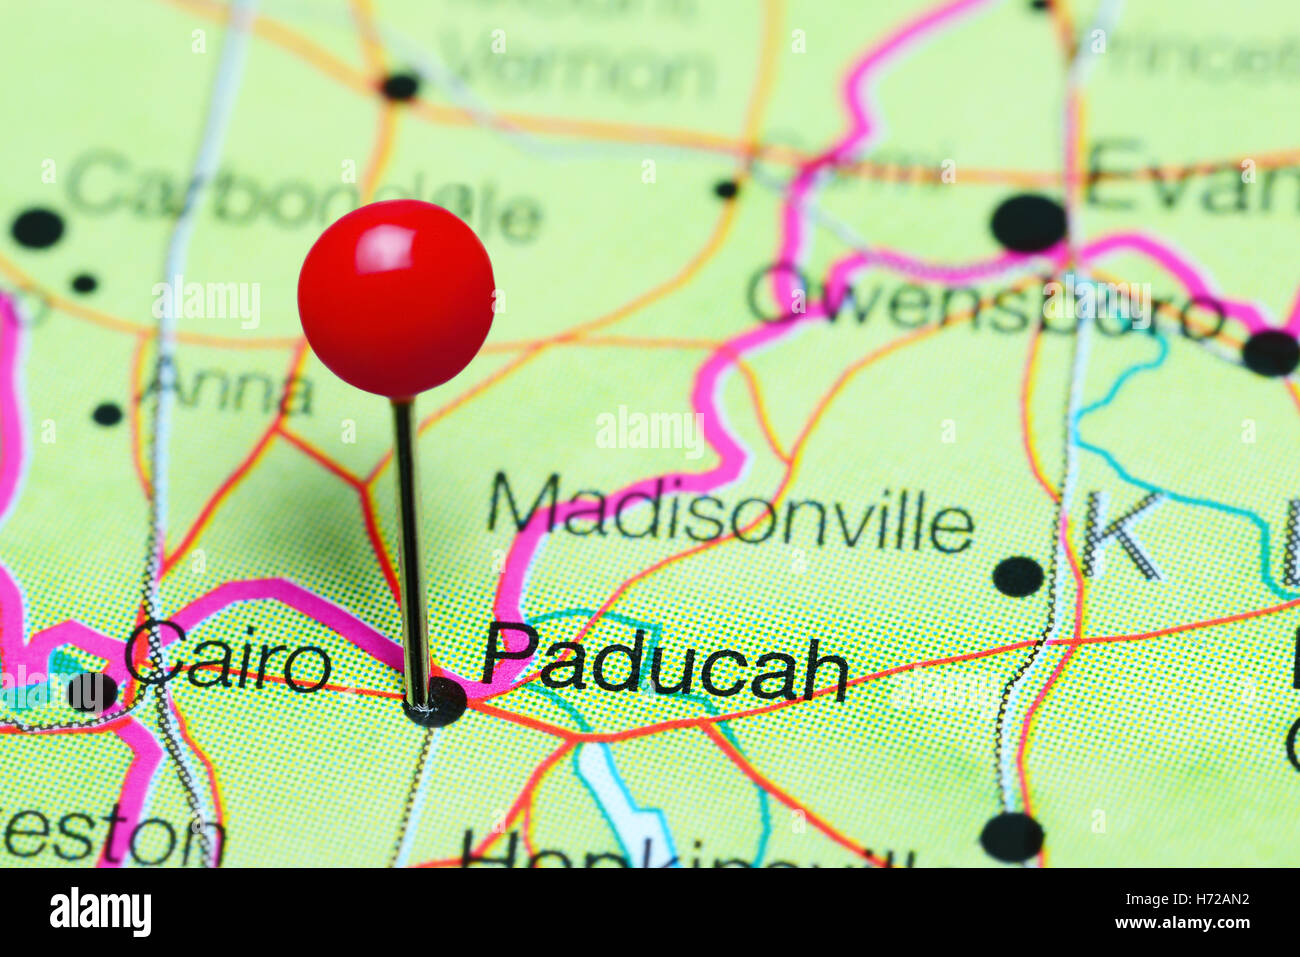 Paducah pinned on a map of Kentucky, USA Stock Photo